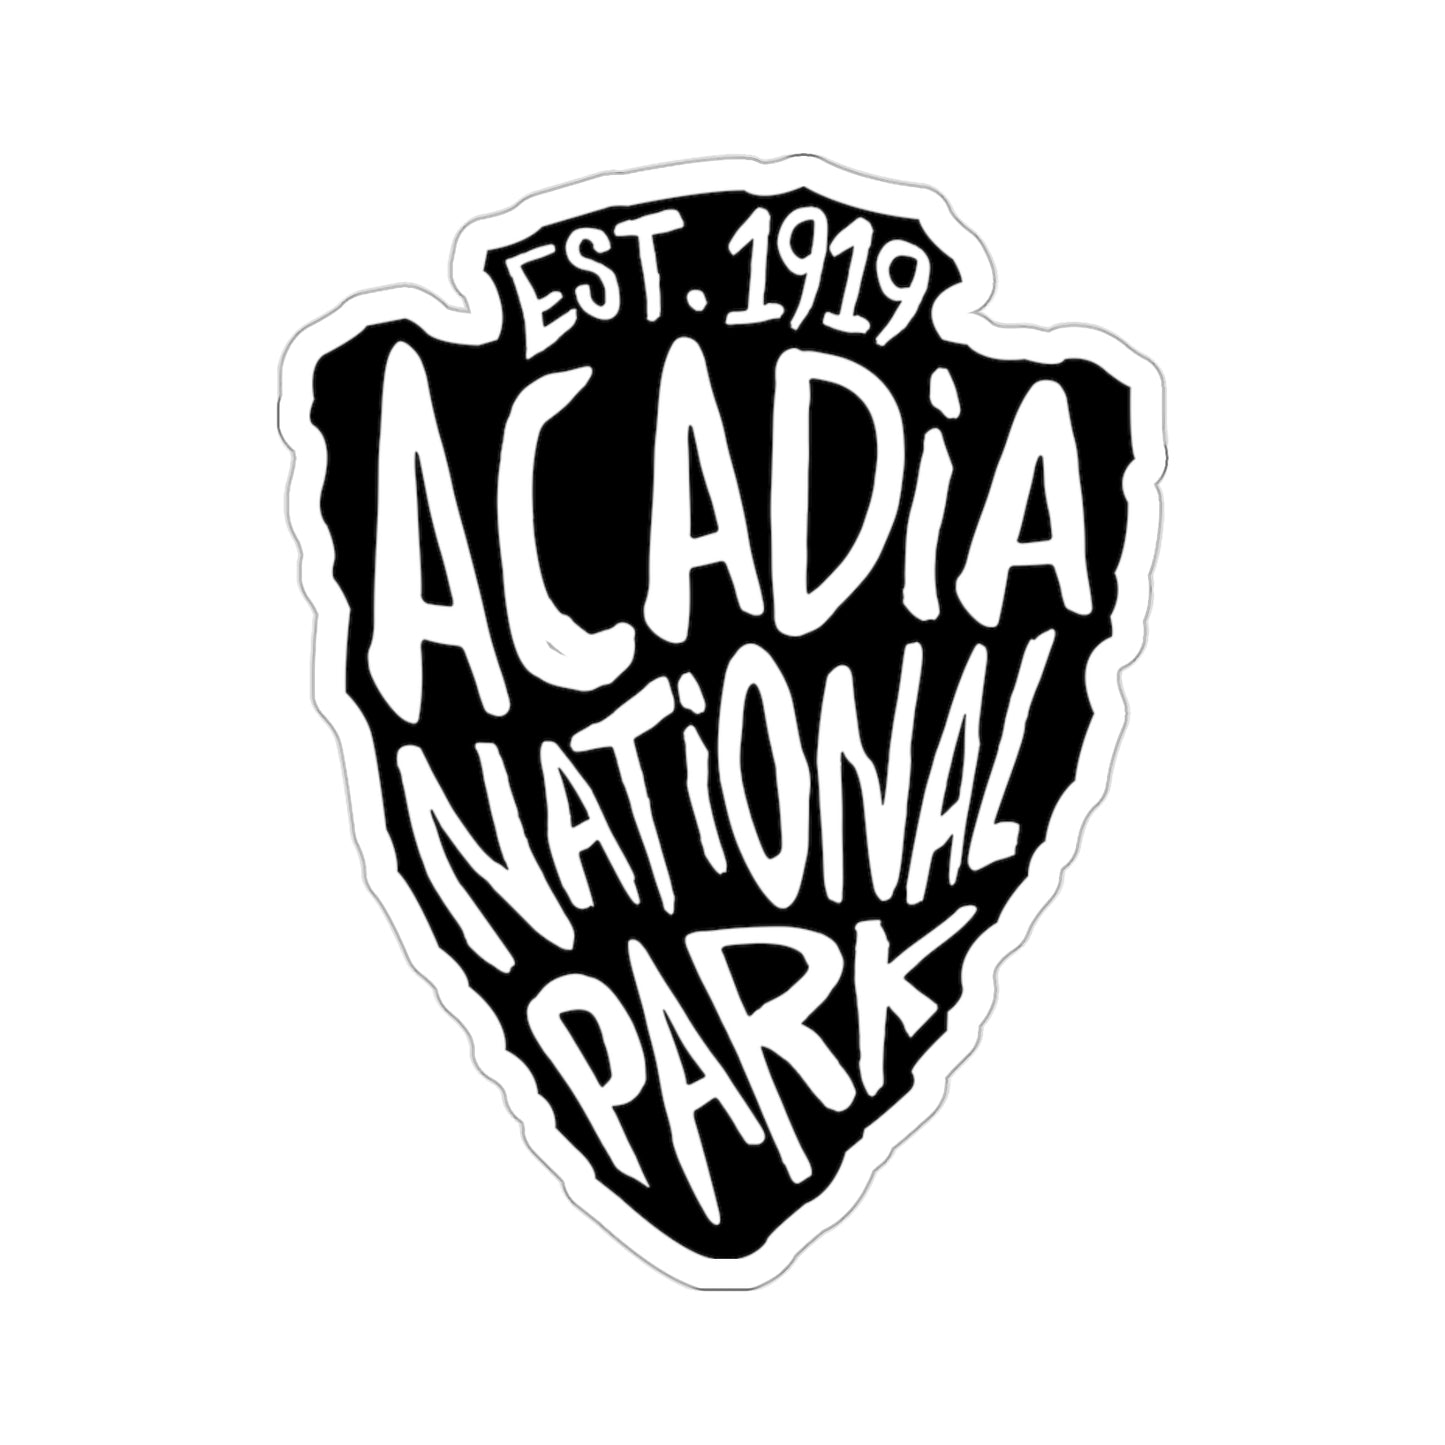 Acadia National Park Sticker - Arrow Head Design